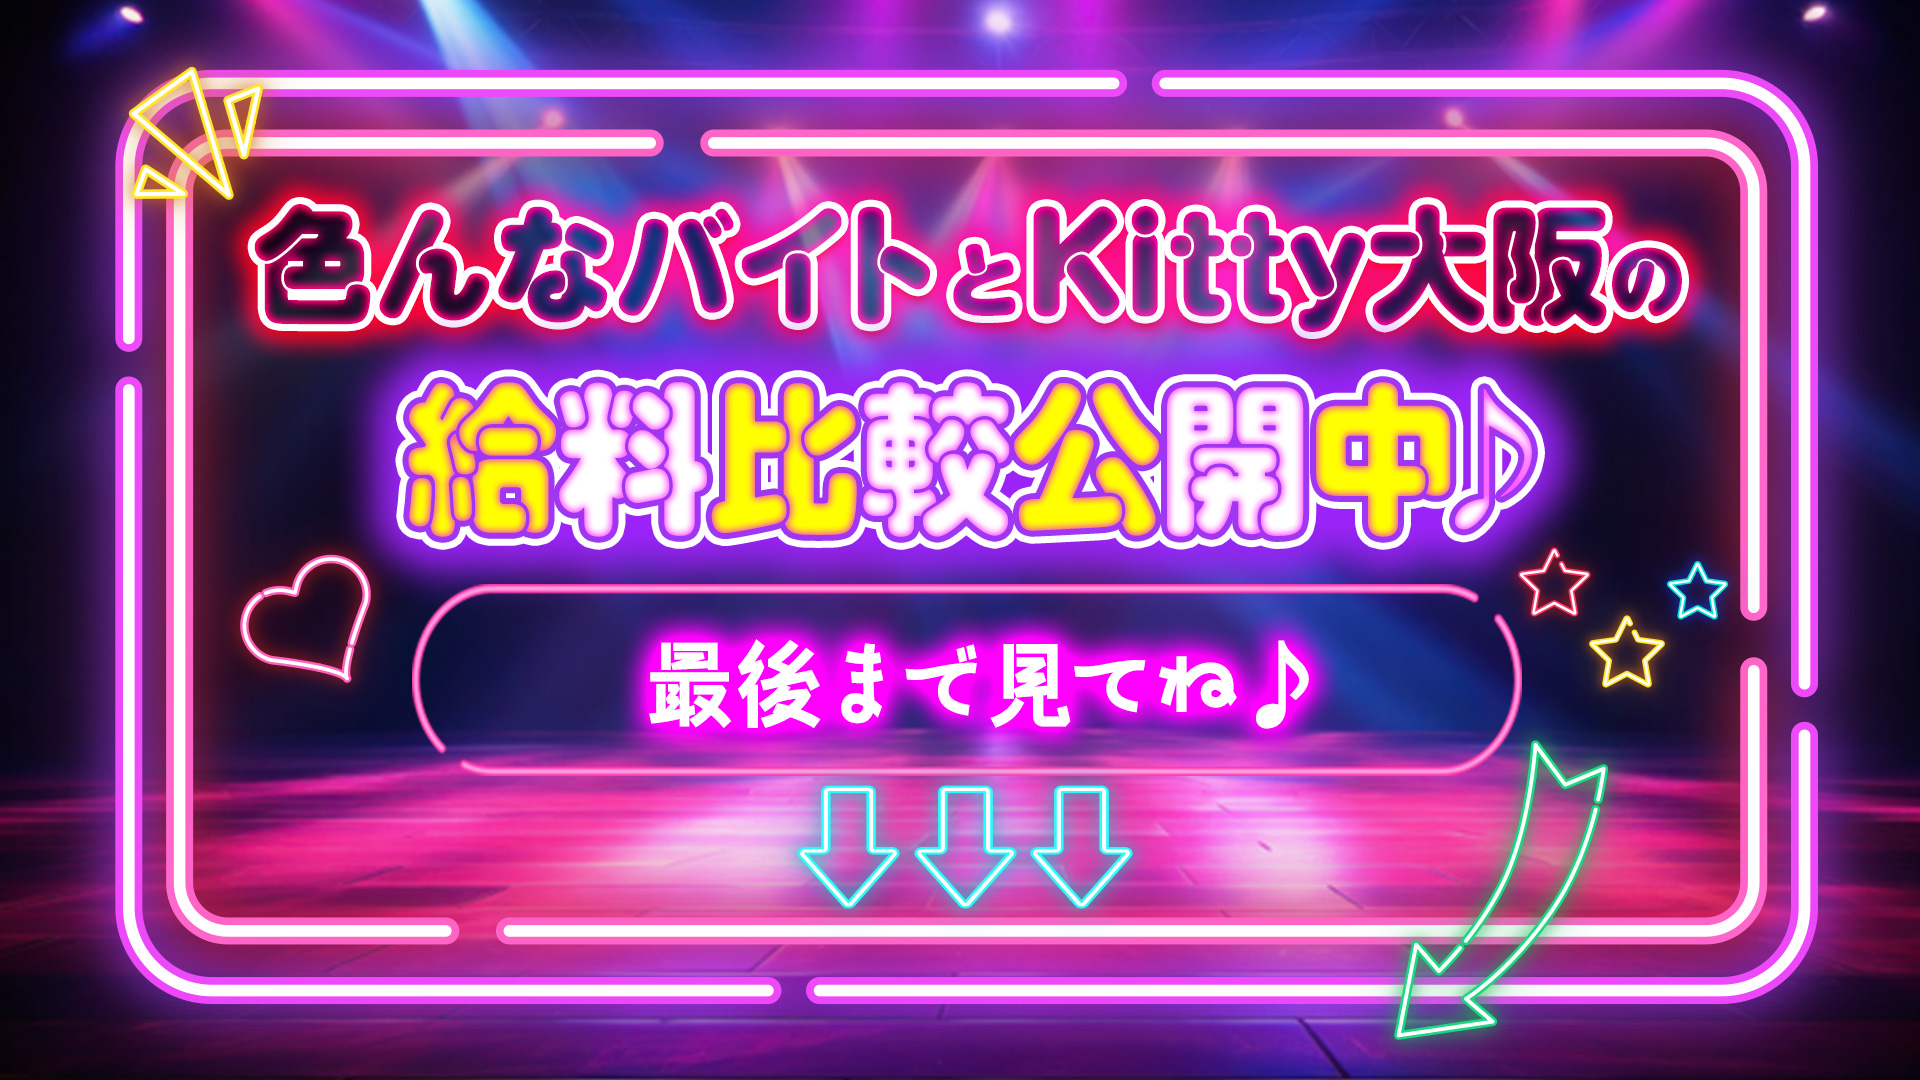 Kitty大阪 十三店の求人画像